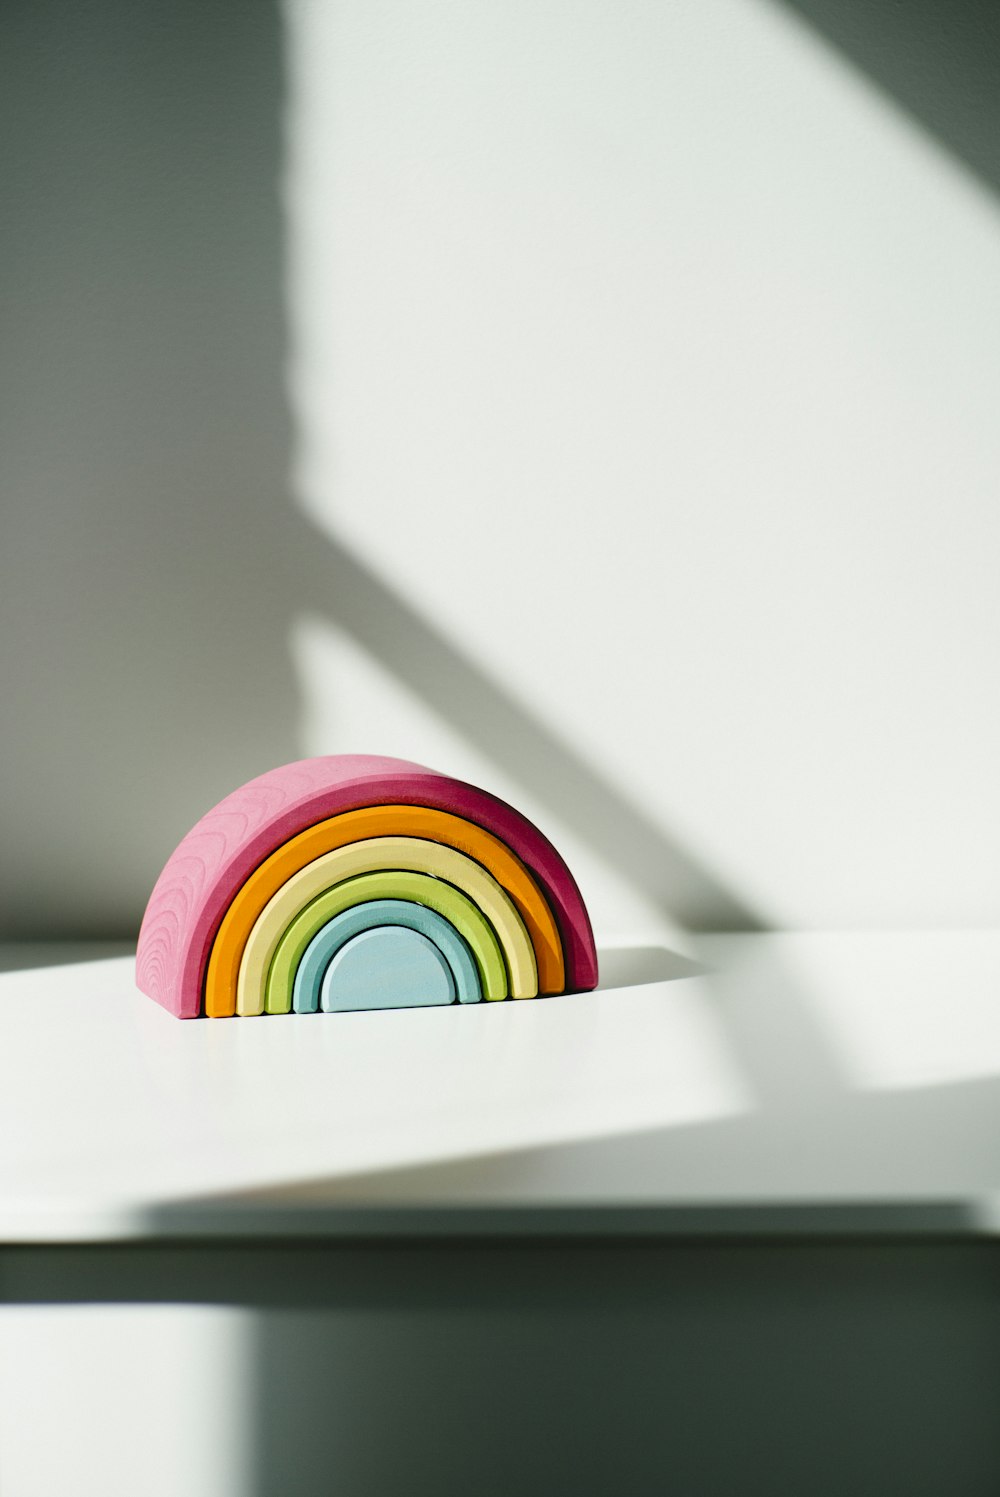 juguete de arcilla arcoíris